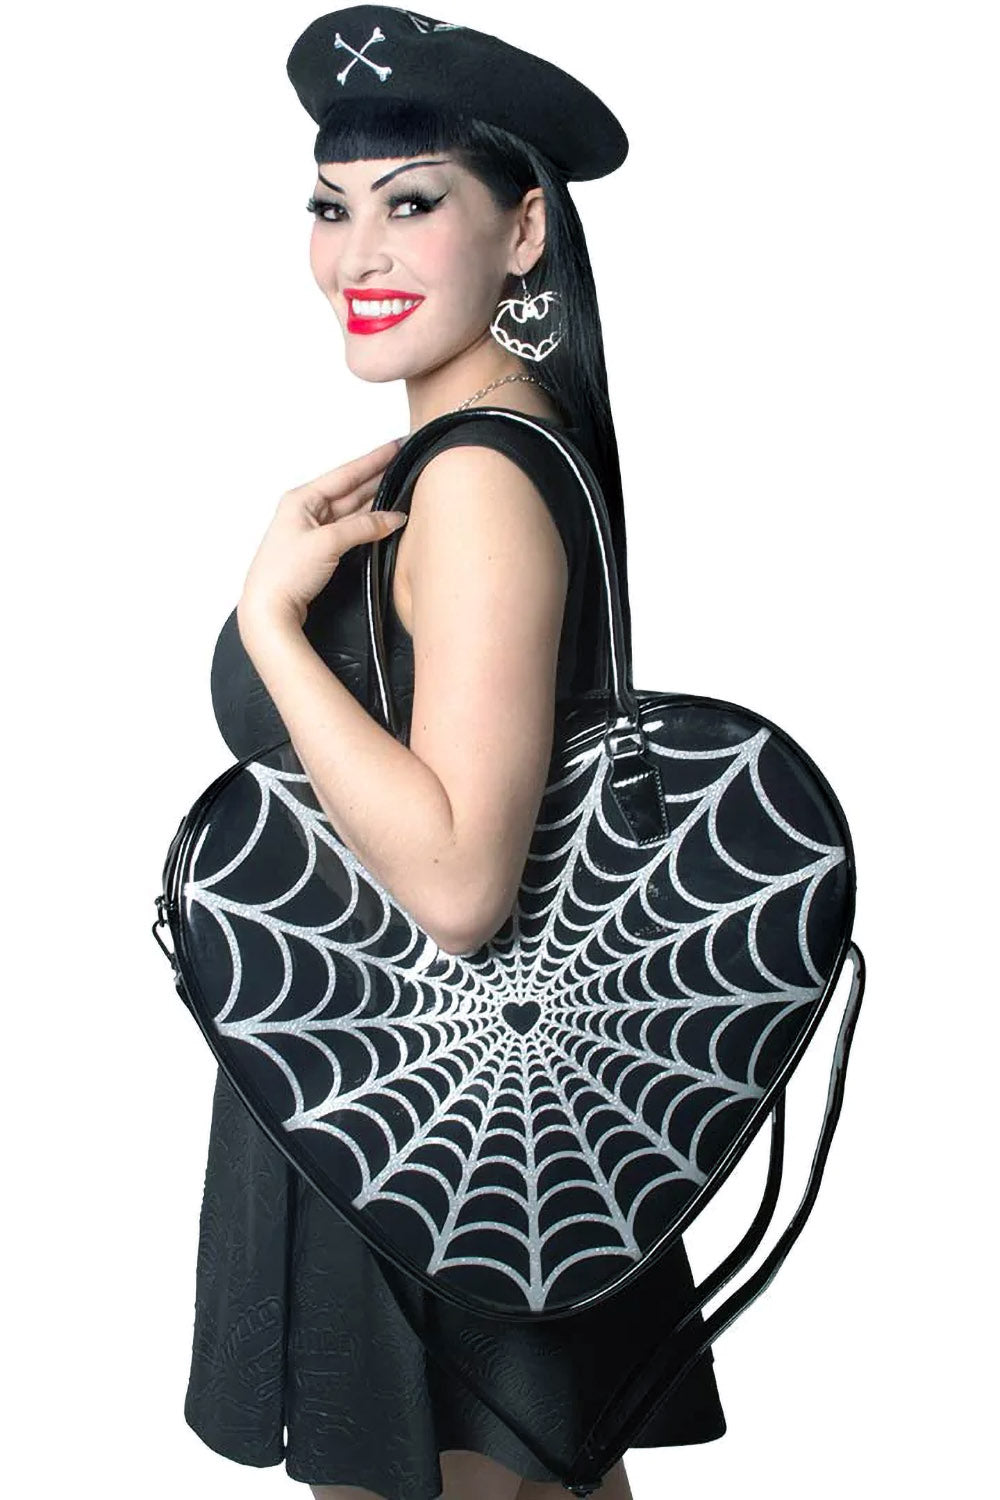 Spiderweb Sparkle Heart Bag